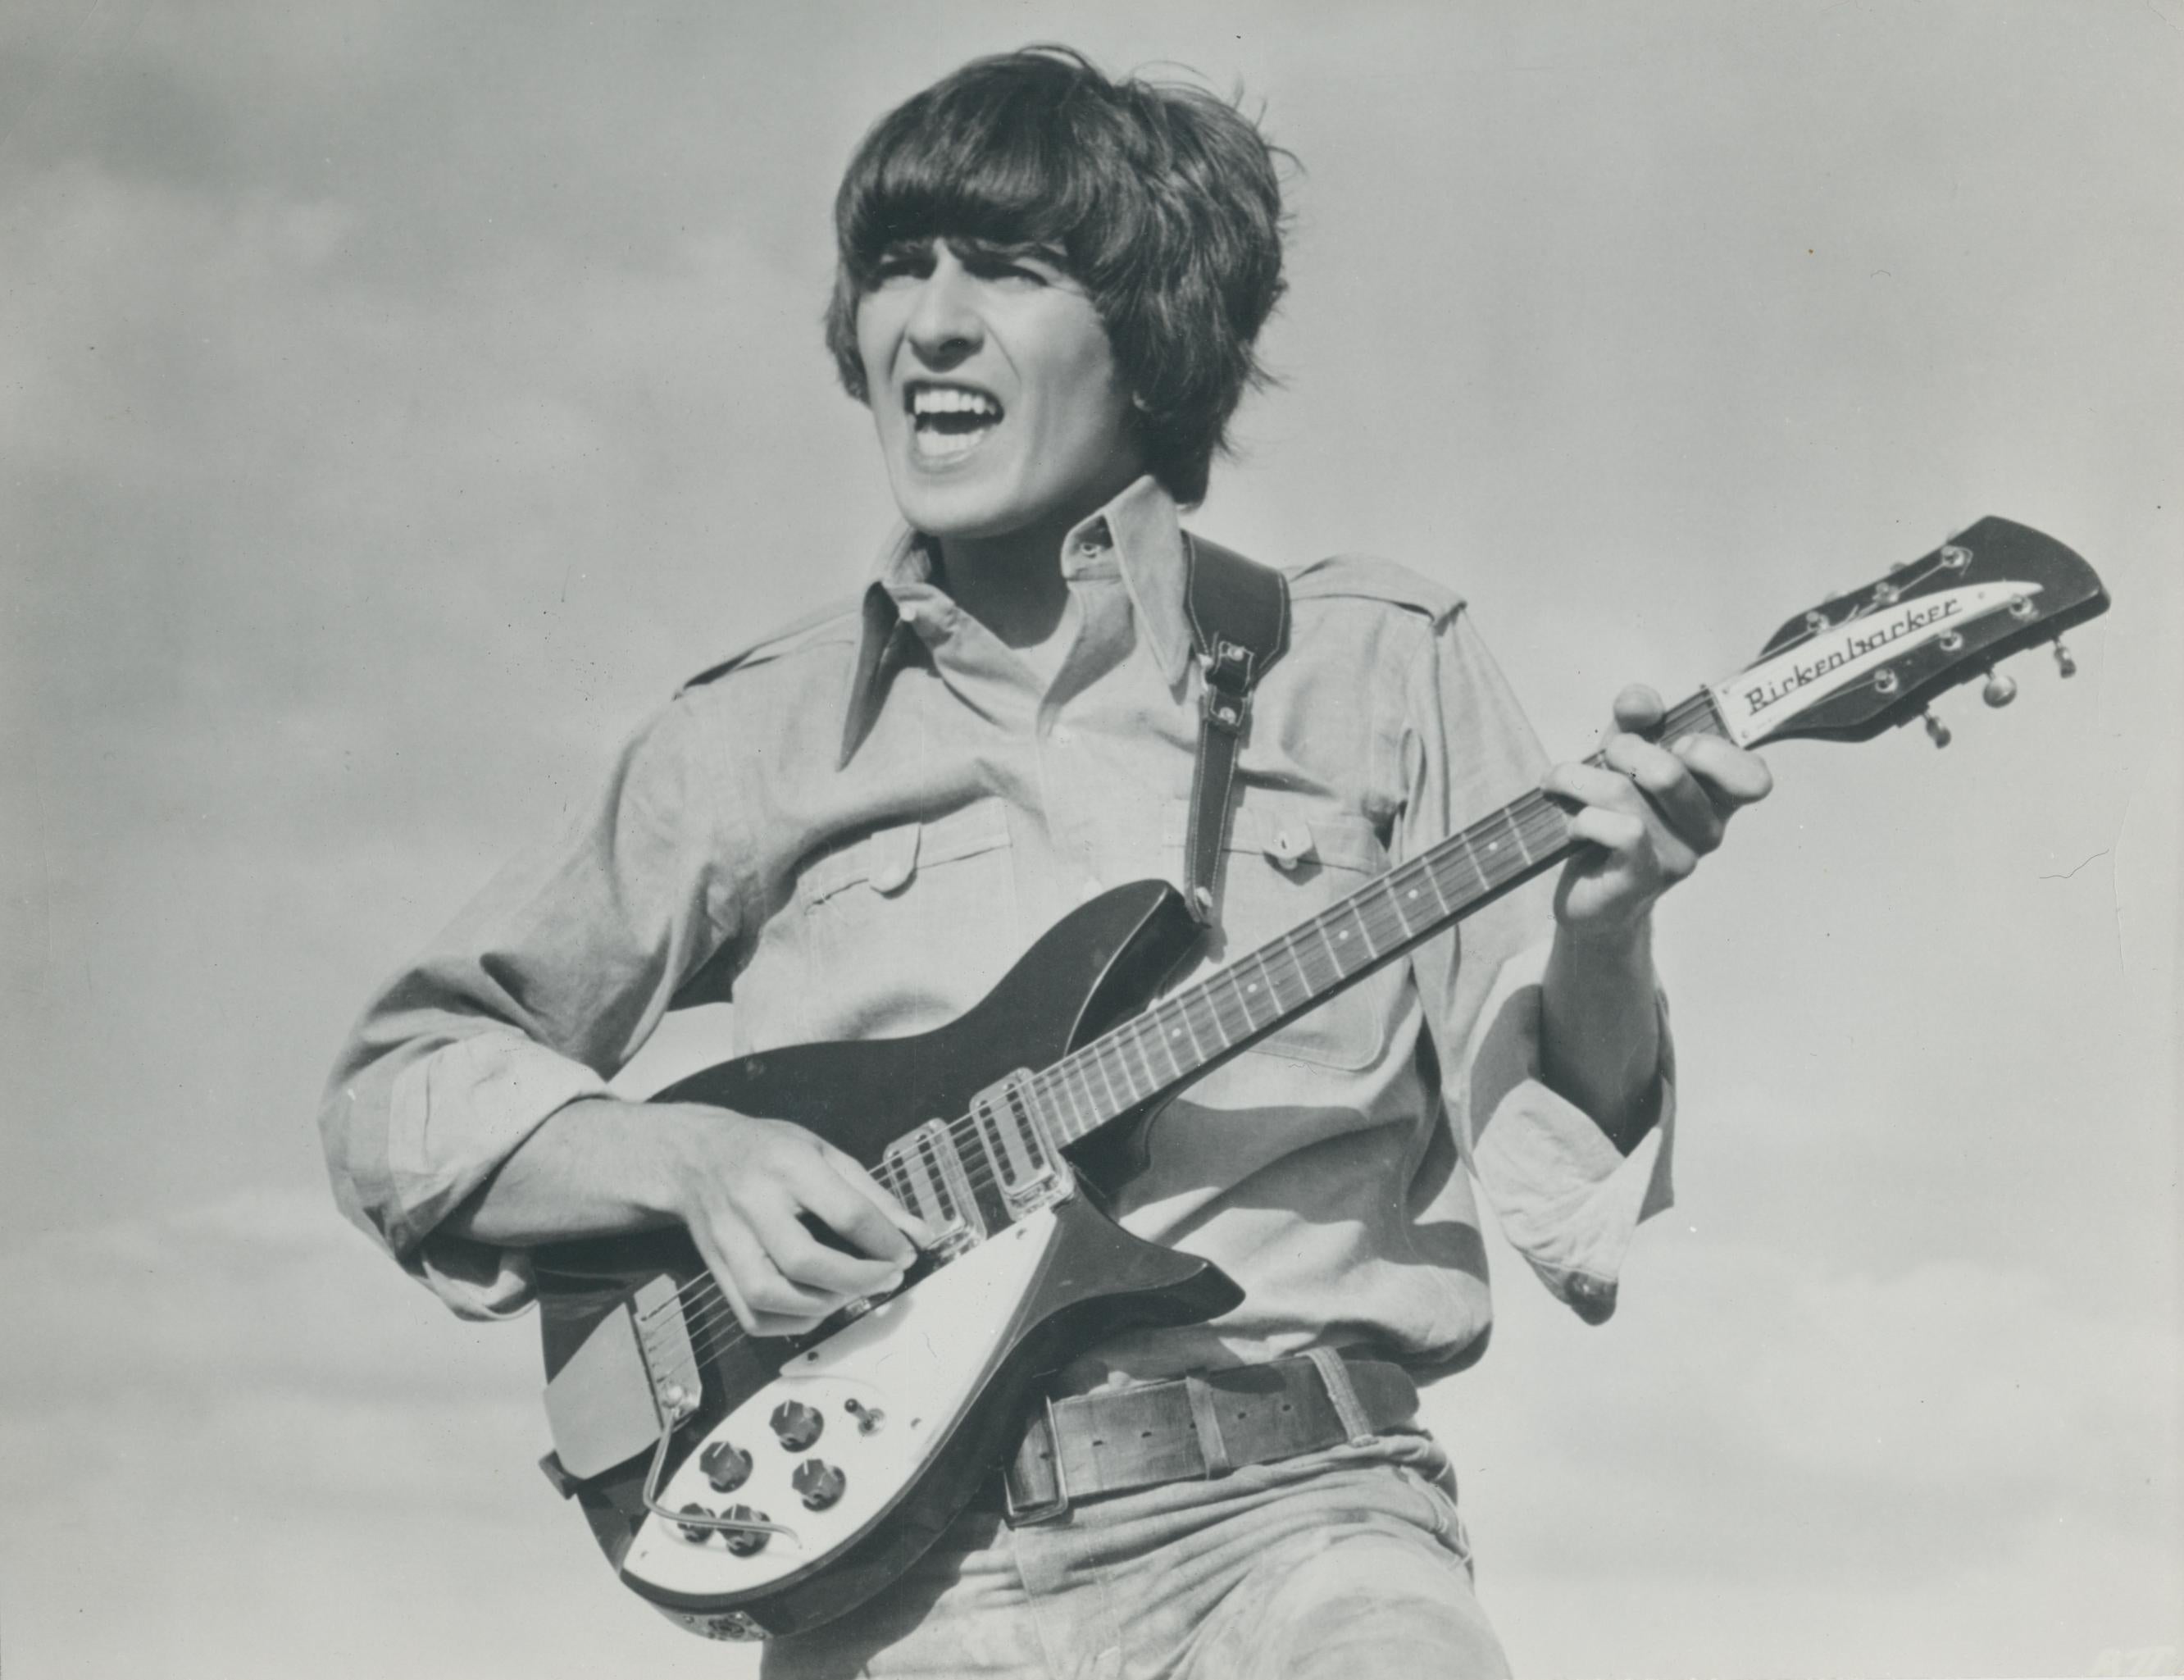 Martin Weaver Portrait Photograph - George Harrison, Guitar, Black and White Photography, ca. 1970s, 17, 2 x 22, 8 cm